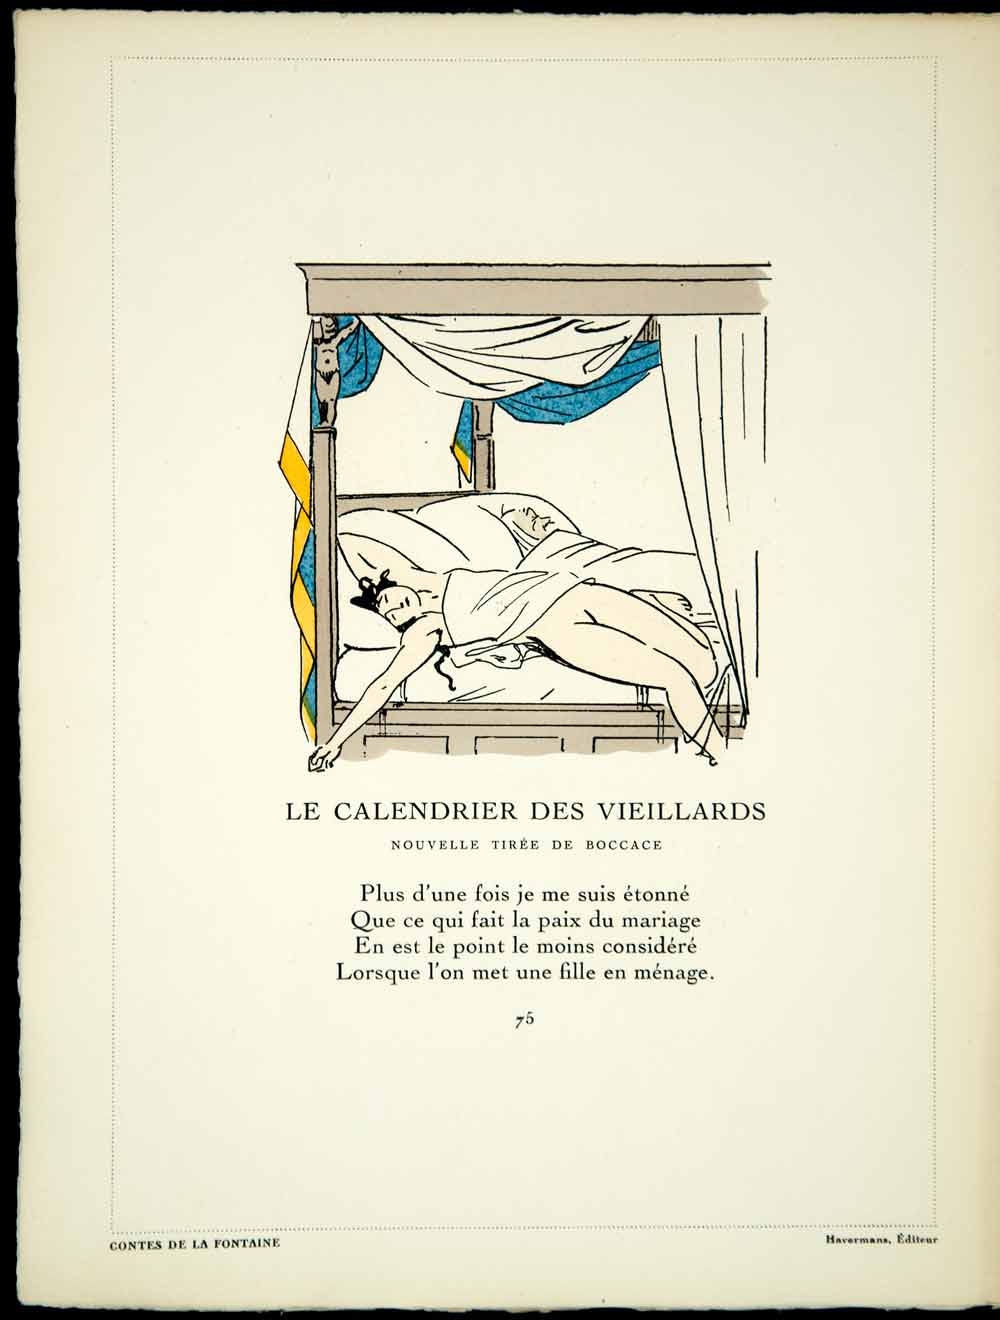 1928 Lithograph Carlegle Nude Art Bed Illustration Contes de La Fontaine ADLC2